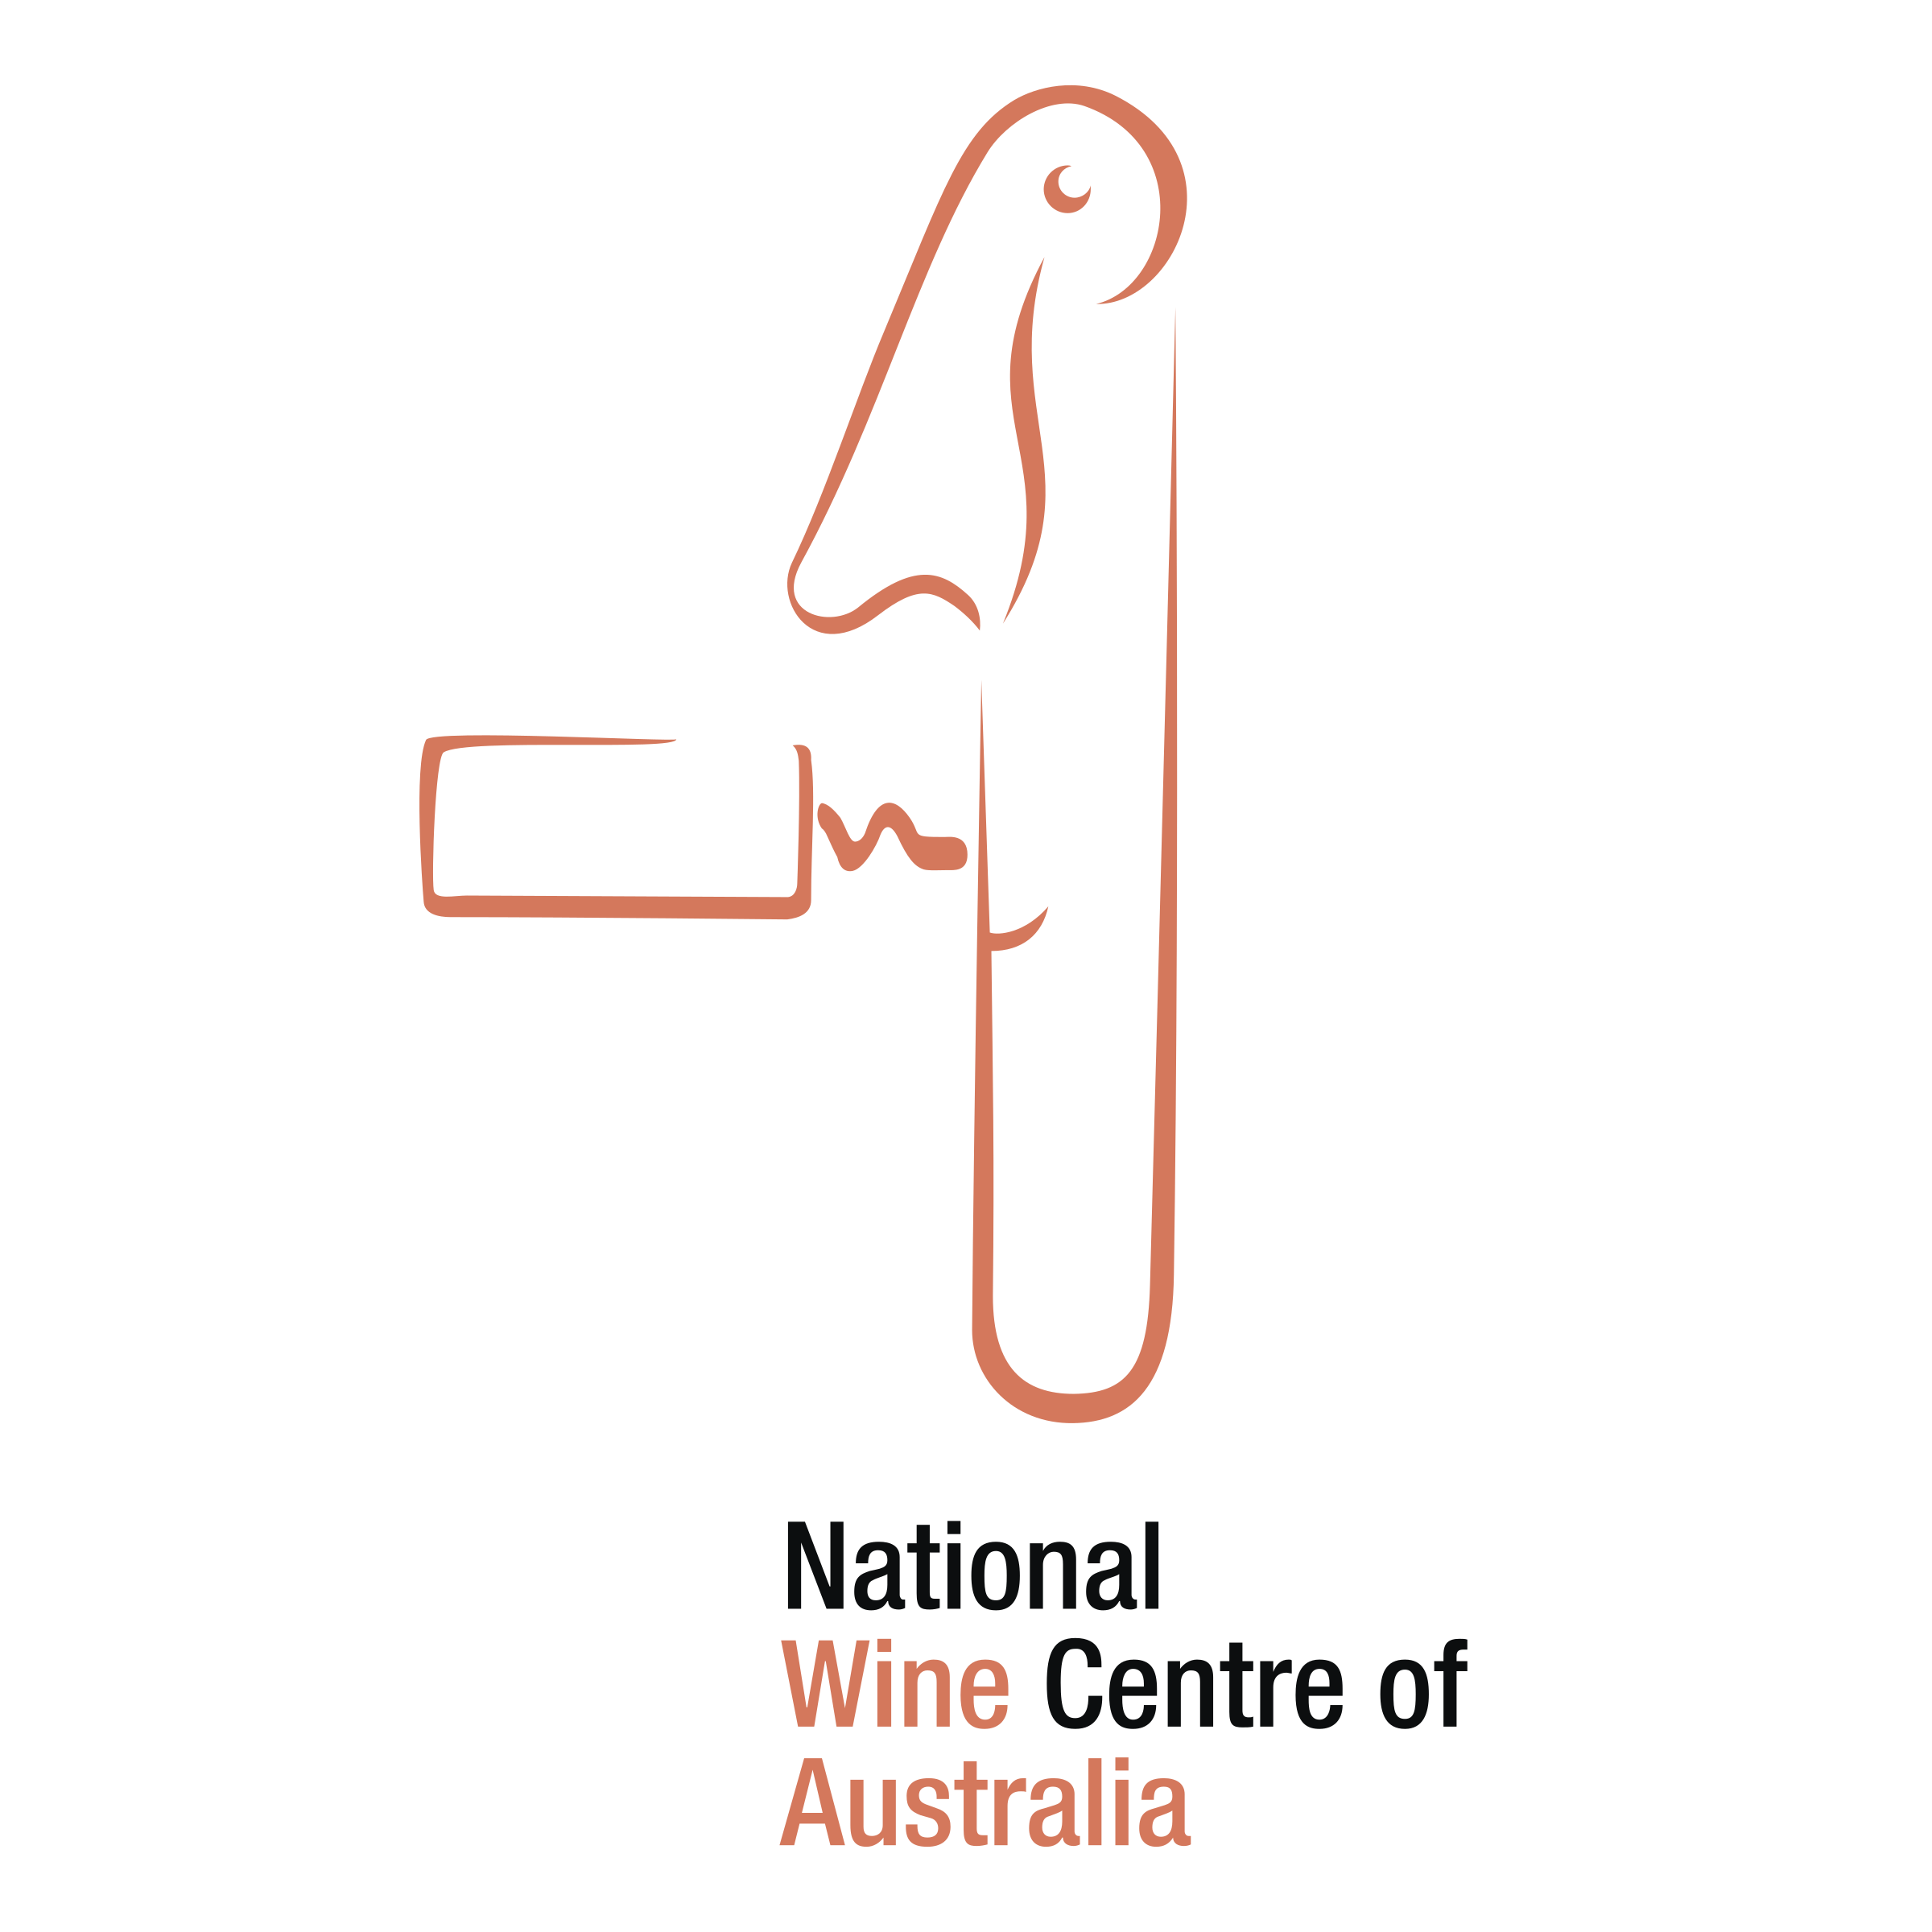 national-wine-centre-of-australia-logo-png-transparent.png